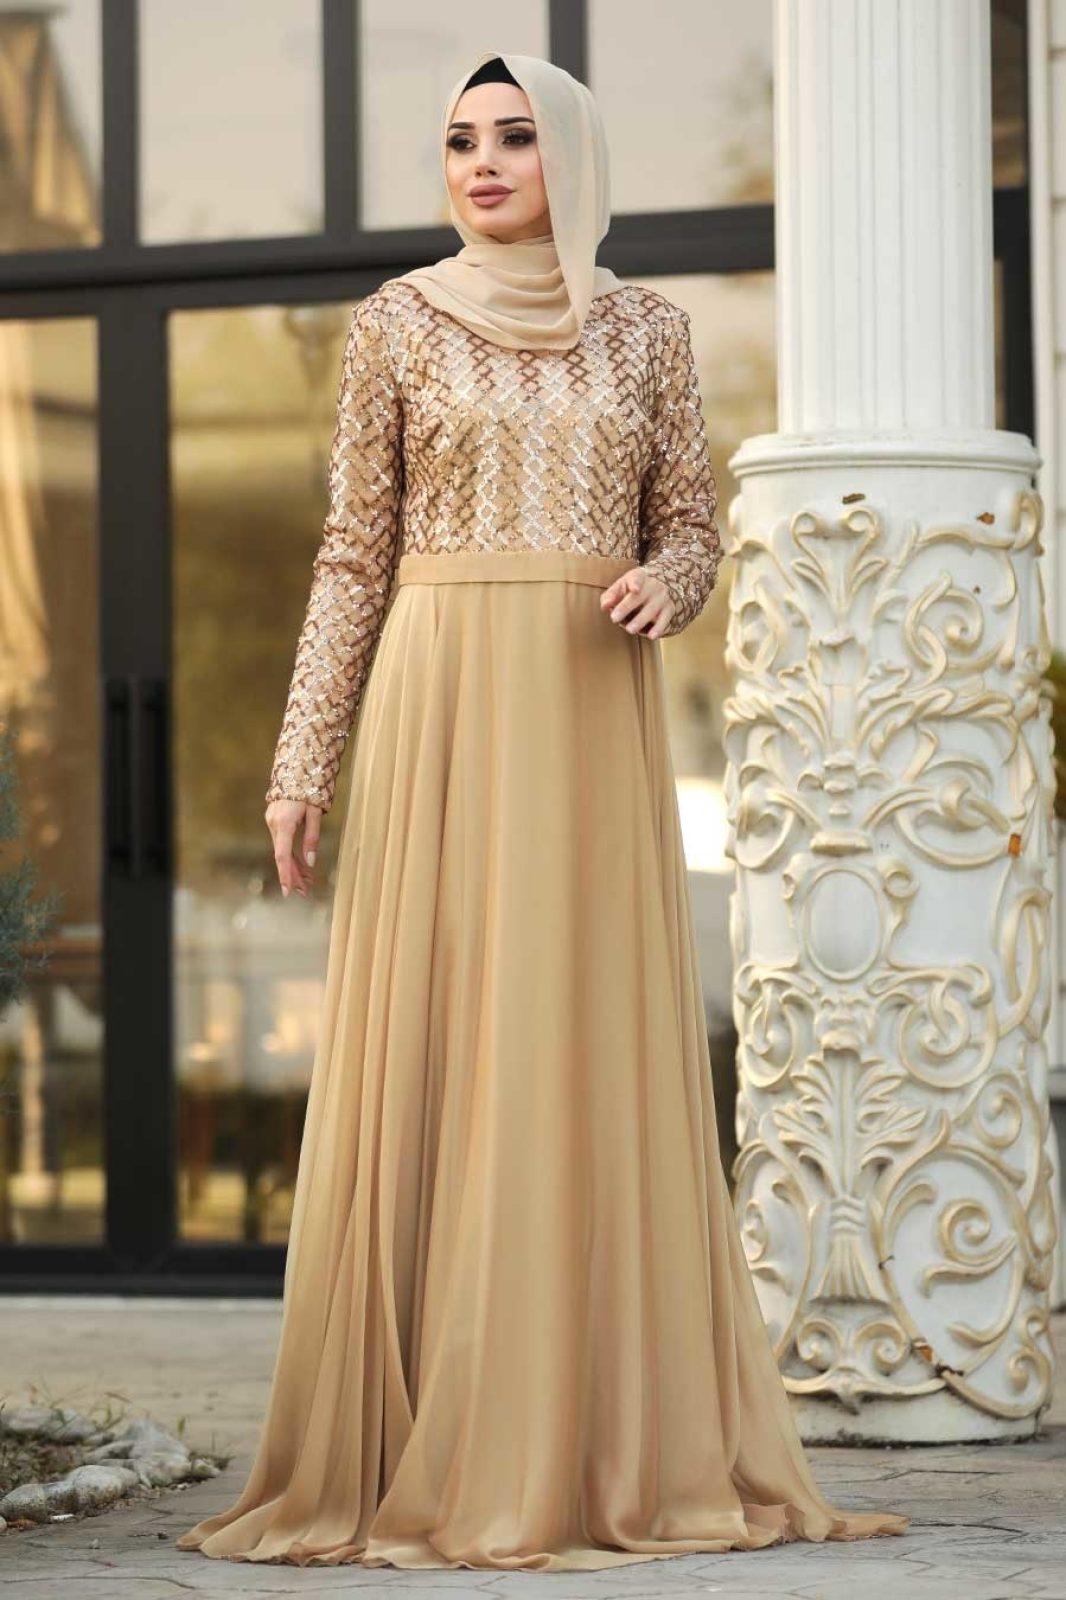 tesetturlu-abiye-elbise-gold-hijab-evening-dress-8127goldtesetturlu-abiye-elbise-gold-hijab-evening-dress-8127gold-evening-dresses-tesetturlu-abiye-elbiseler-61633-19-B-1.jpg